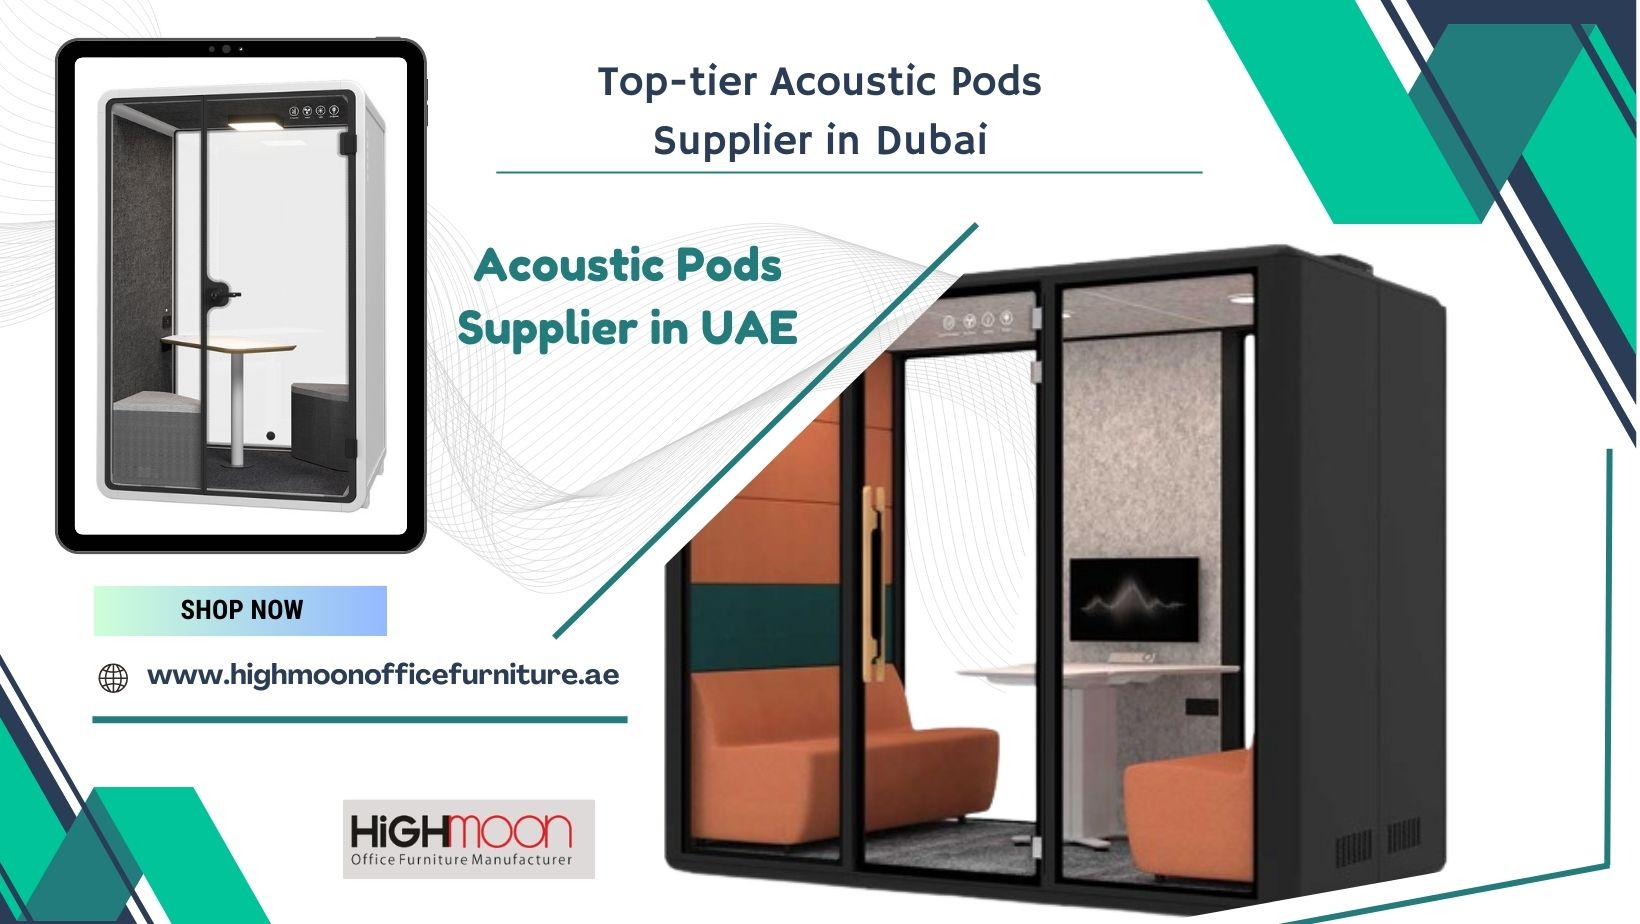 Acoustic Pods Supplier in Dubai